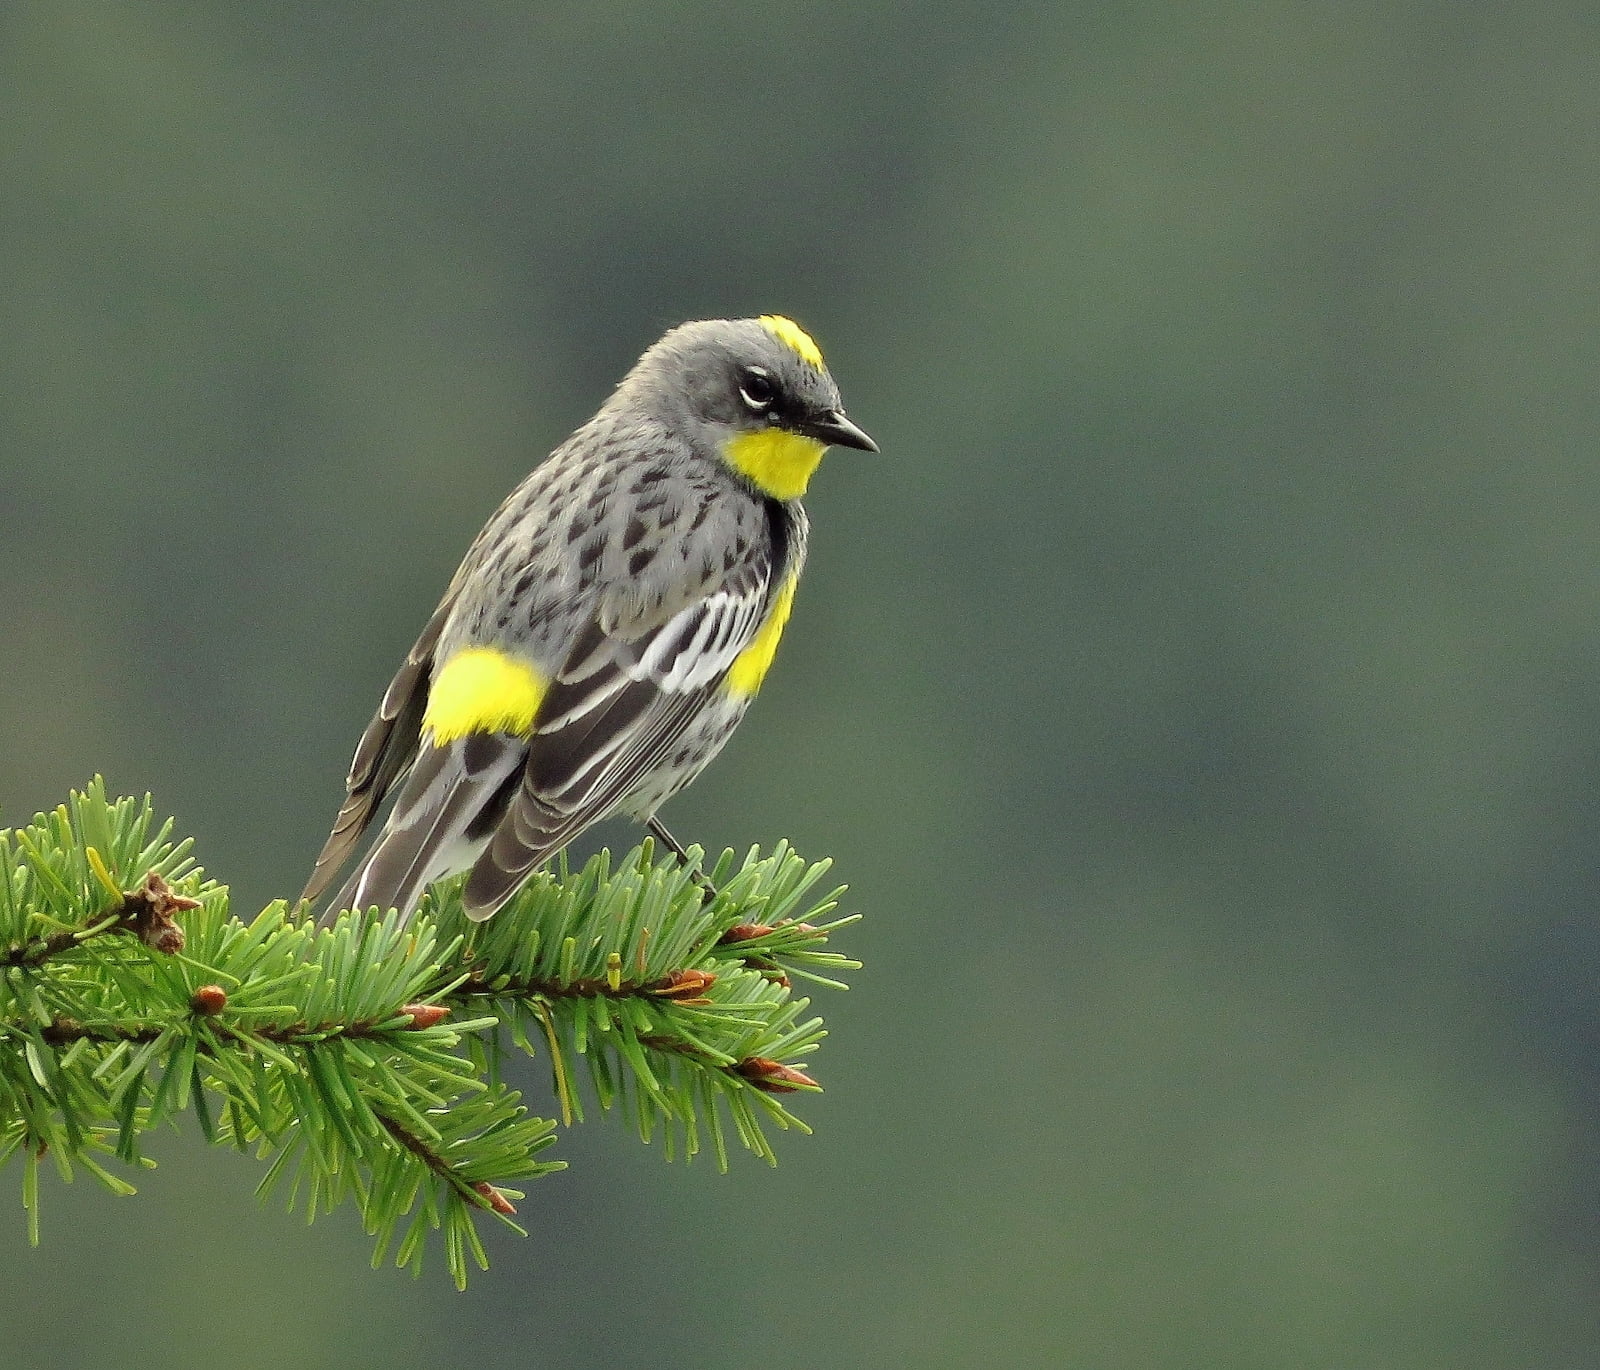 gray and yellow throated bird, yellow-rumped warbler, yellow-rumped warbler